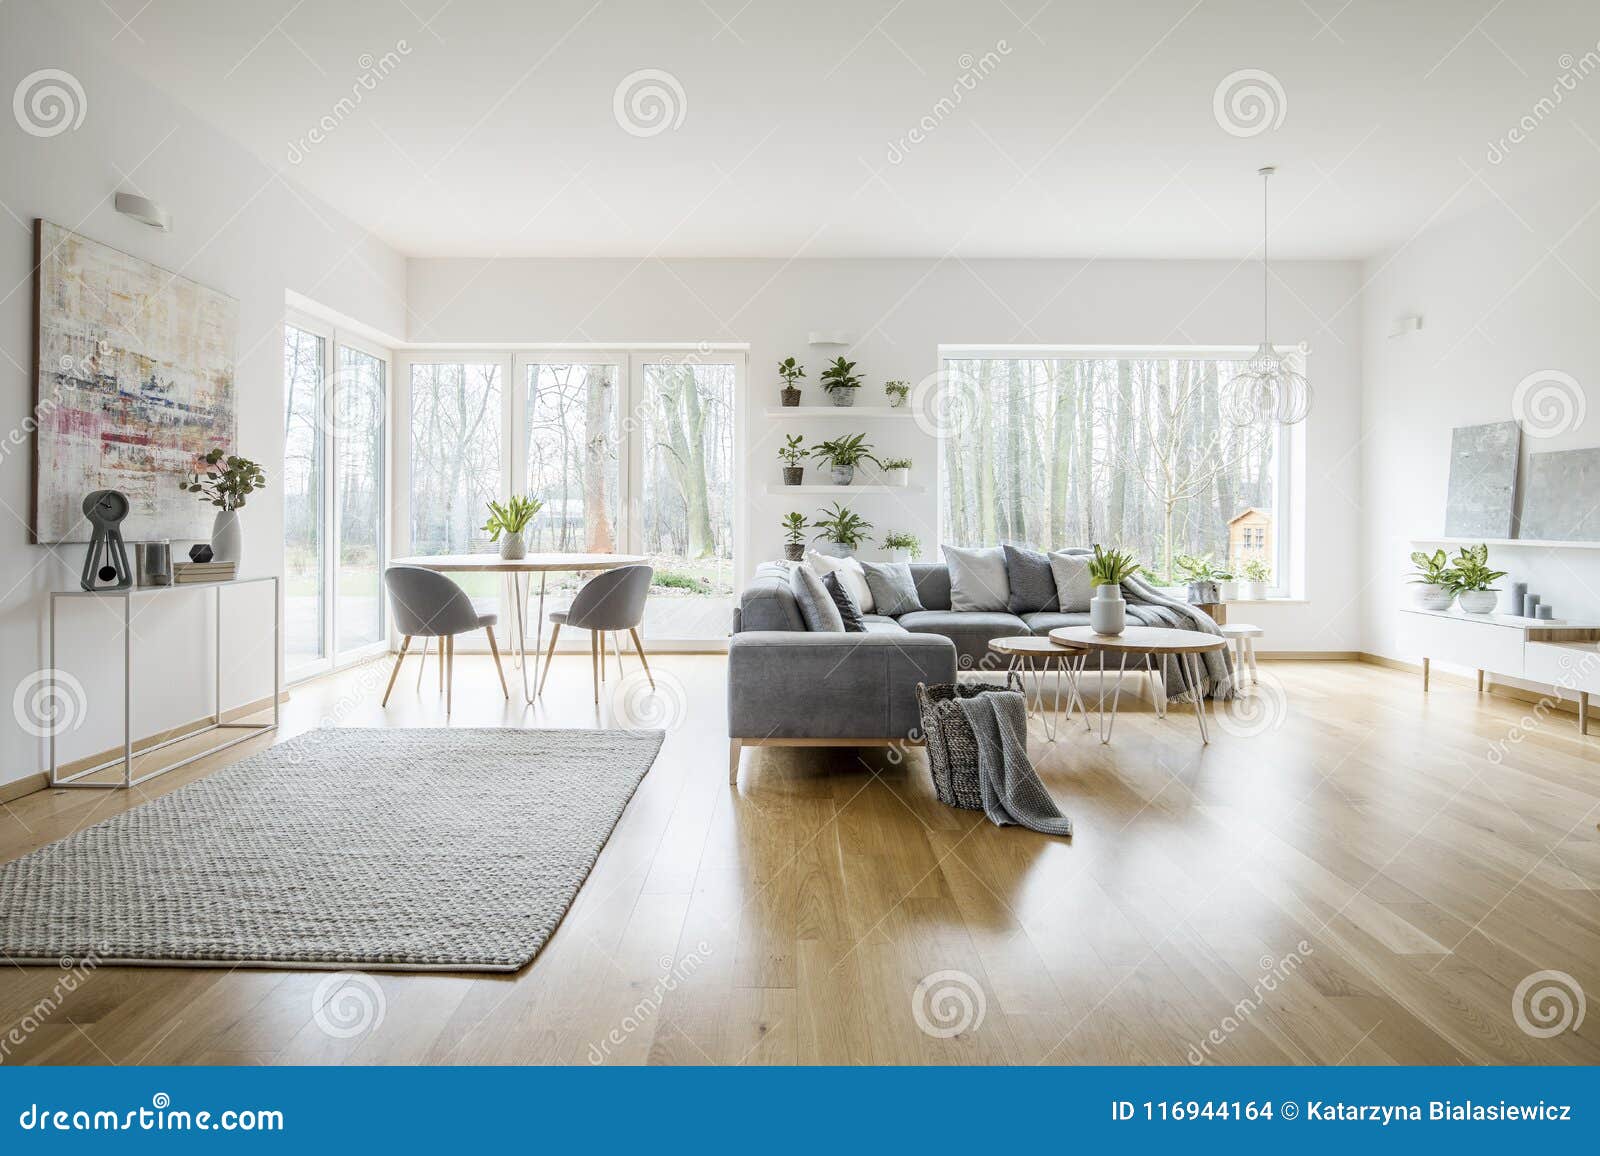 white elegant living room interior with windows